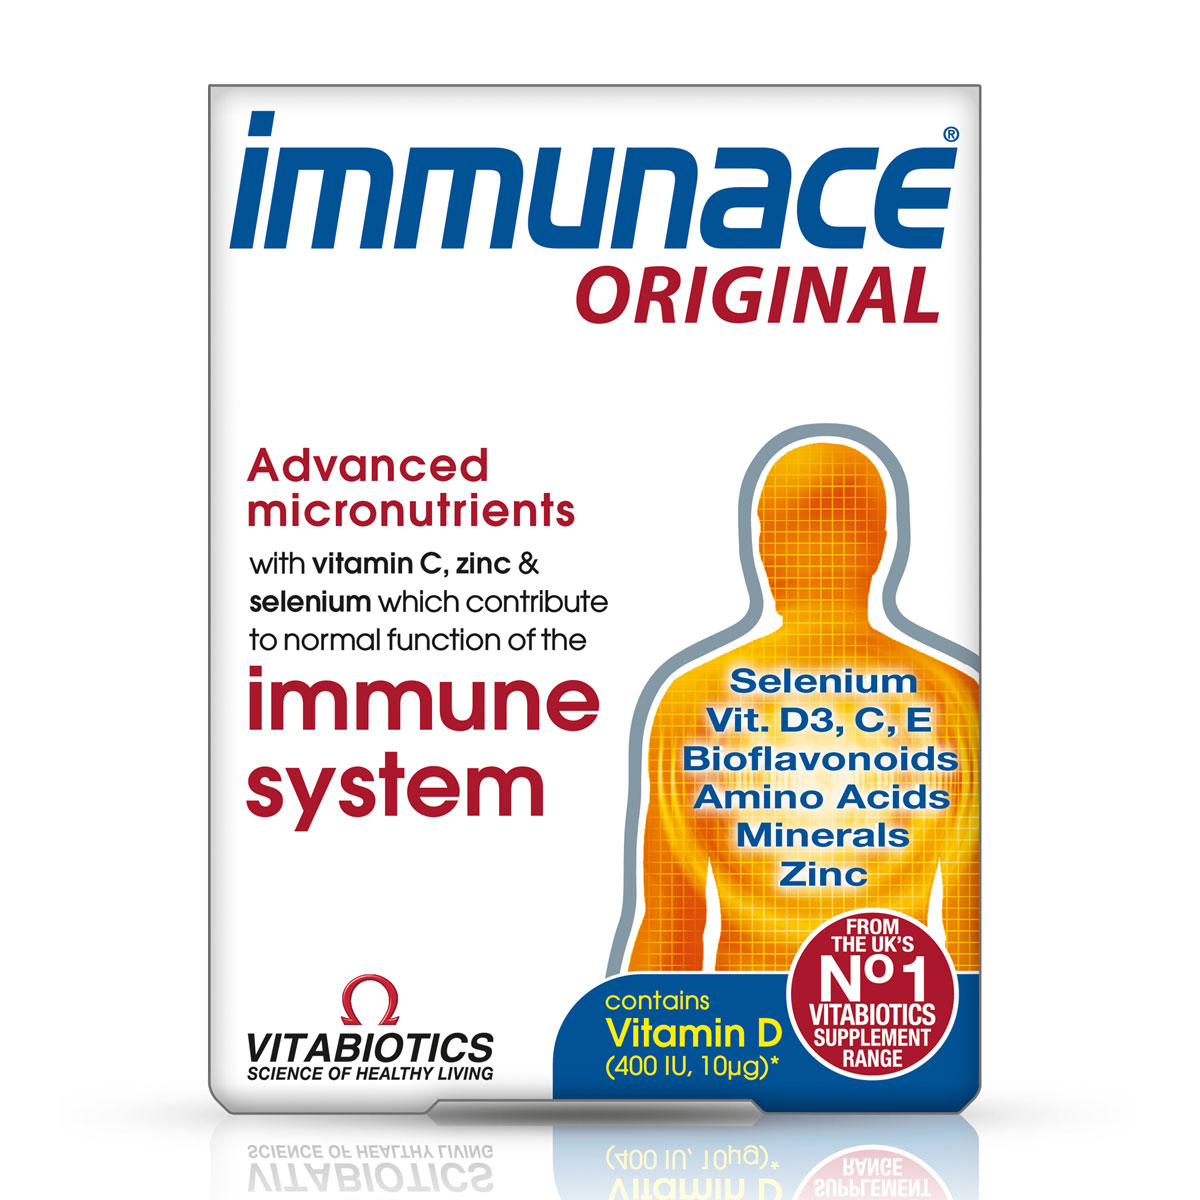 Immunace Original - 30 tableta